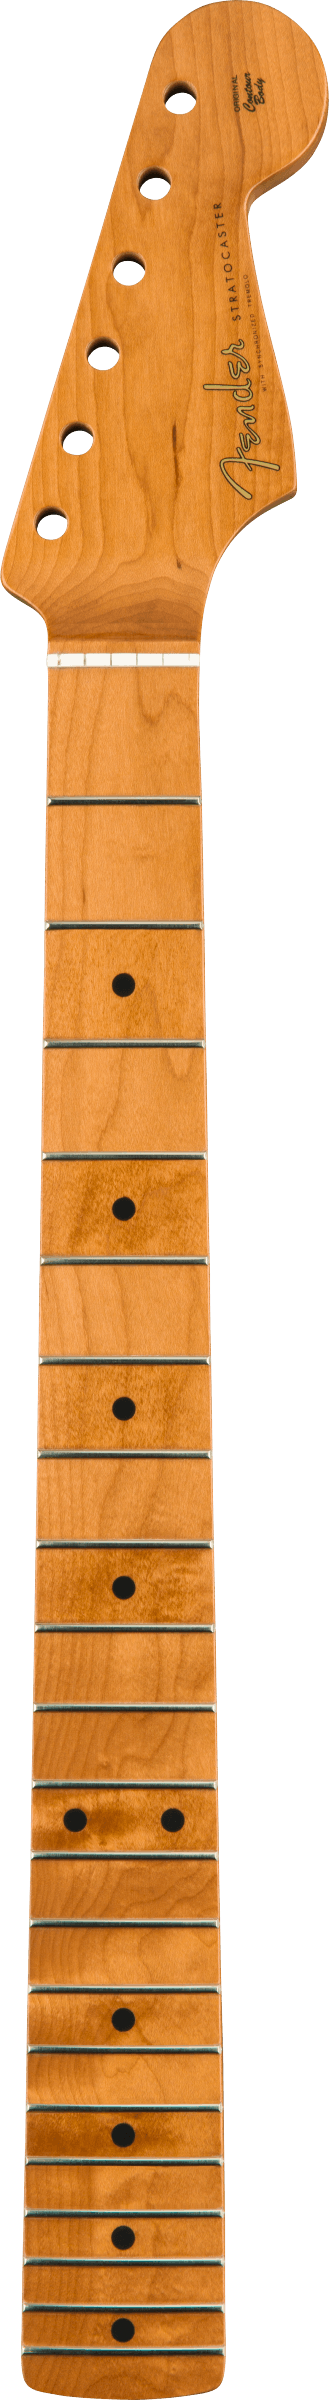 Roasted Maple Vintera Mod '60's Stratocaster Neck 21 Medium Jumbo Frets, 9.5", "C" Shape